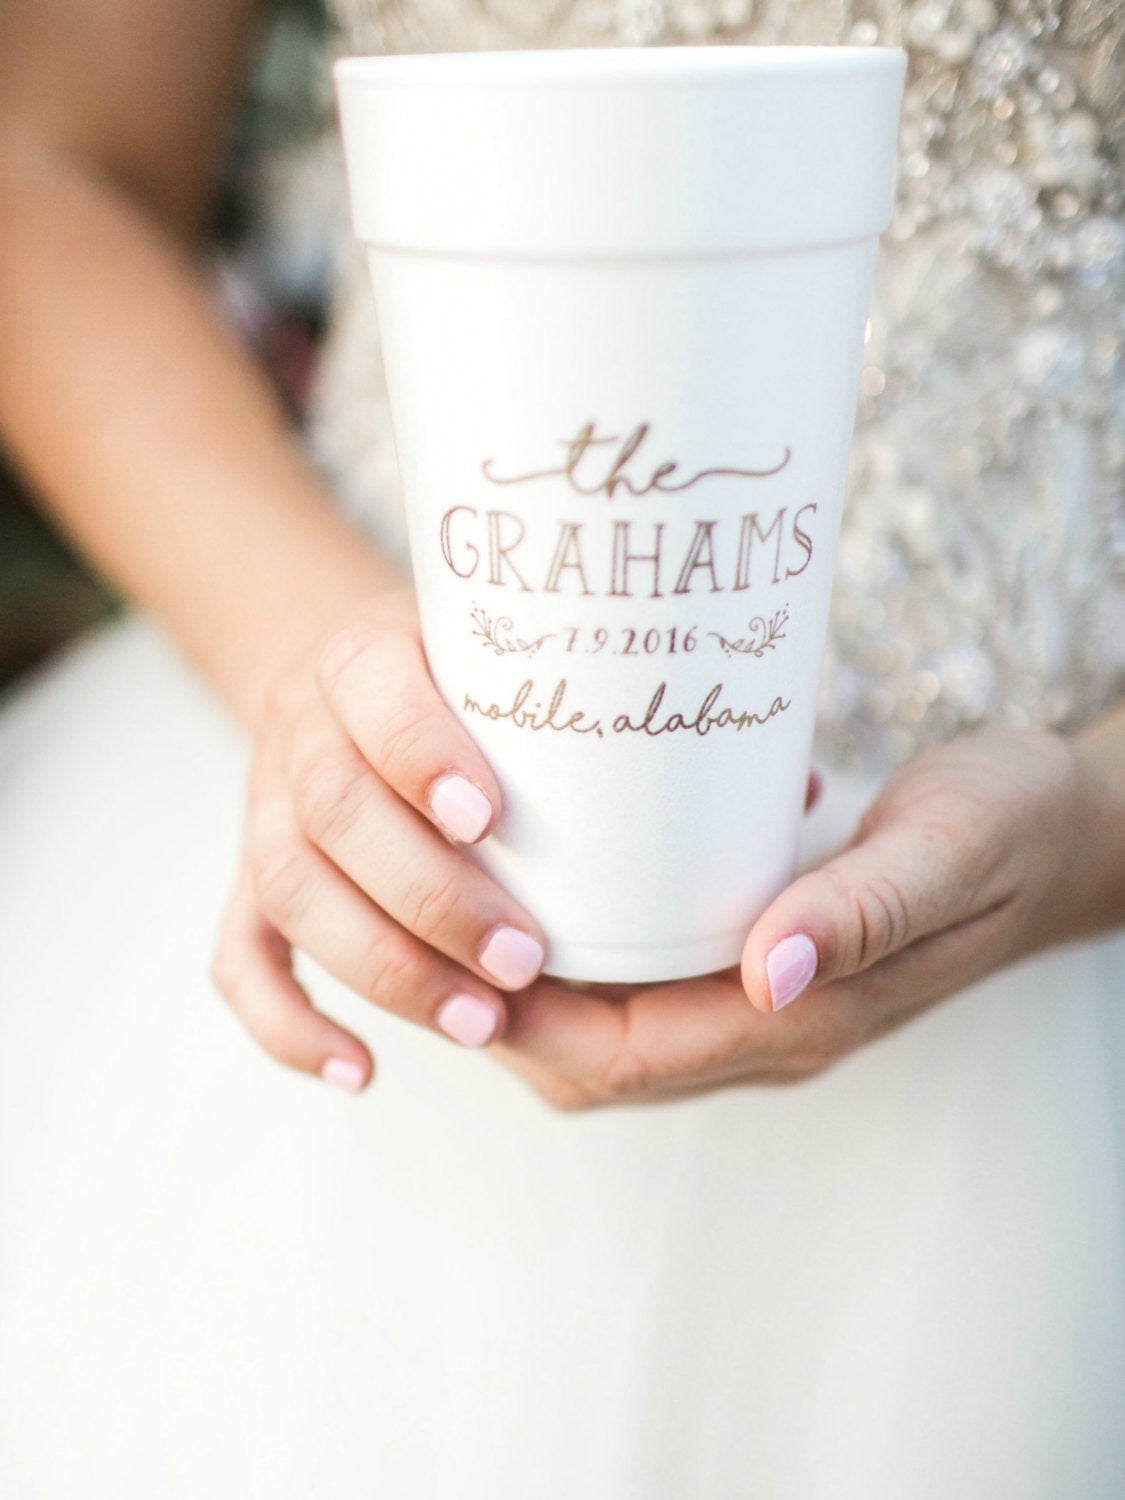 Personalized Wedding Foam Cups #1422